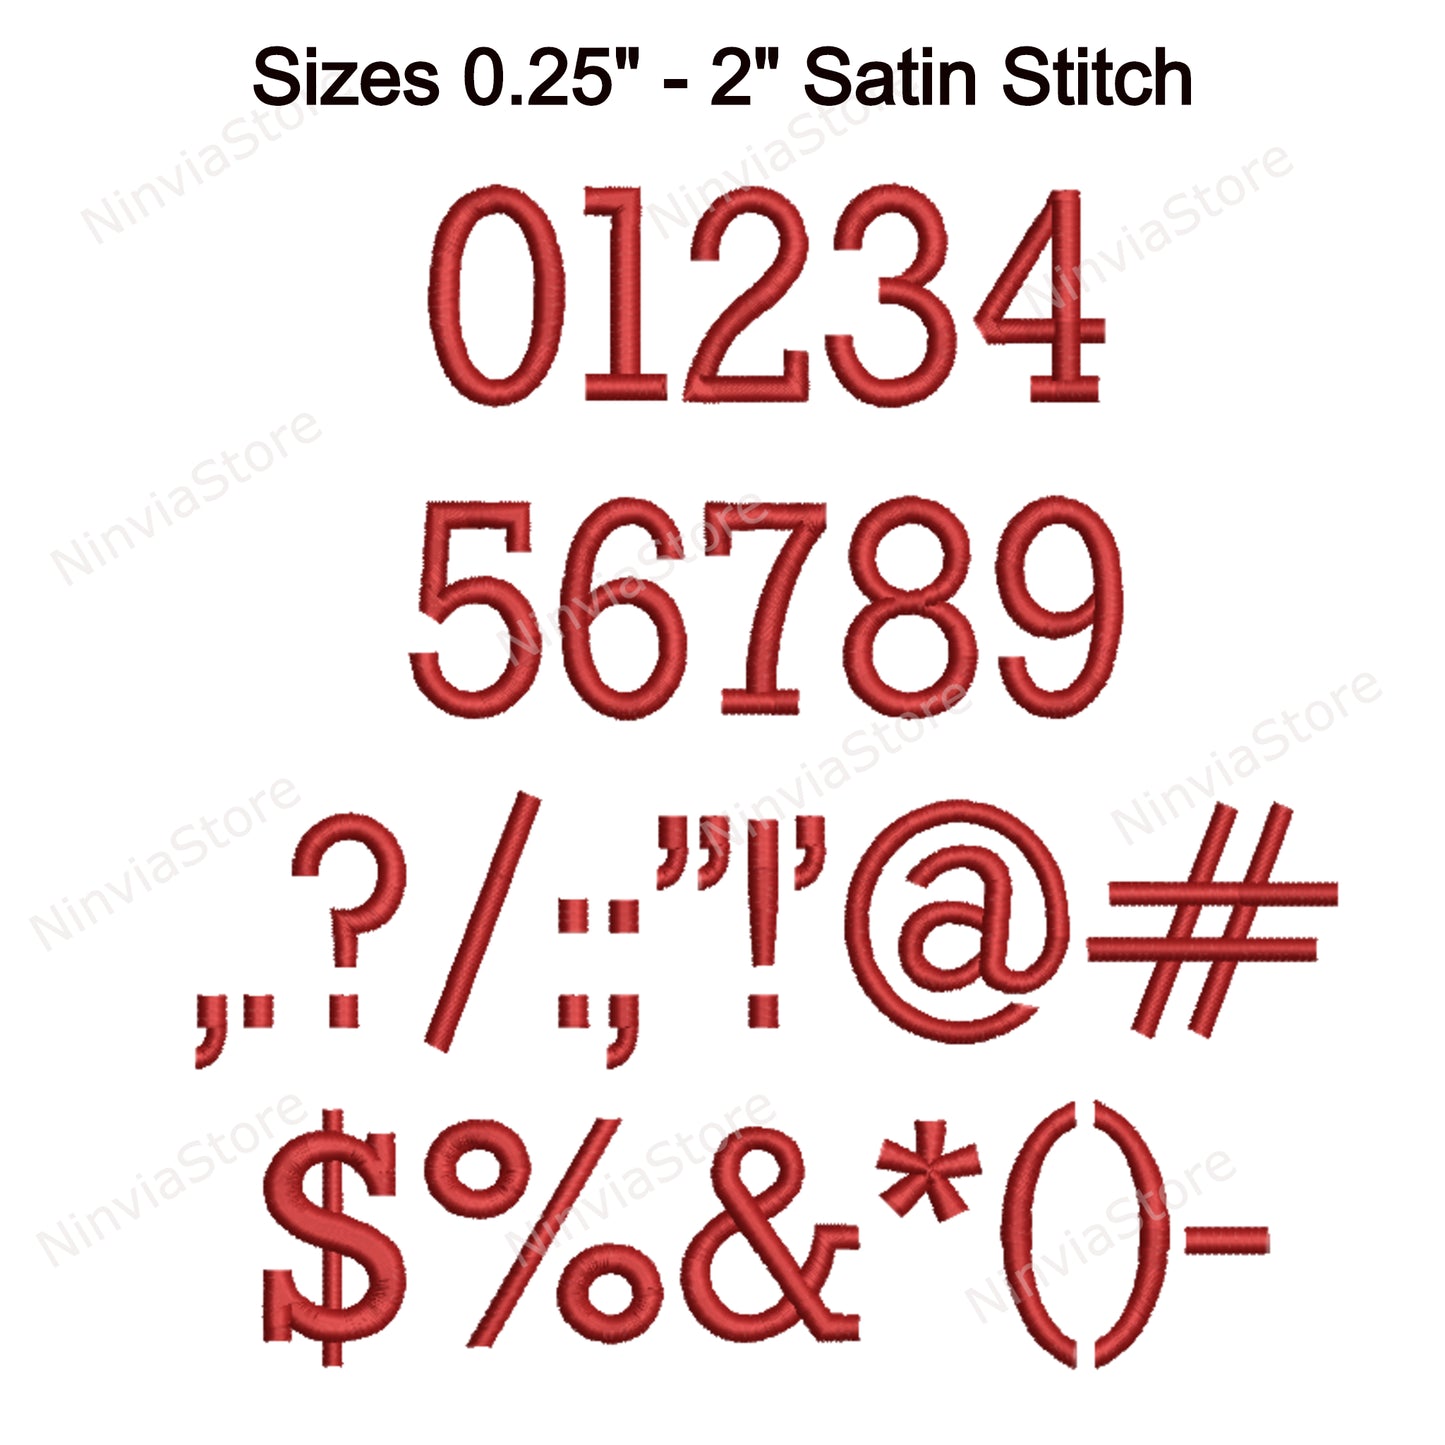 Burgundy Machine Embroidery Font, 15 sizes, 8 formats, BX Font, PE font, Monogram Alphabet Embroidery Designs